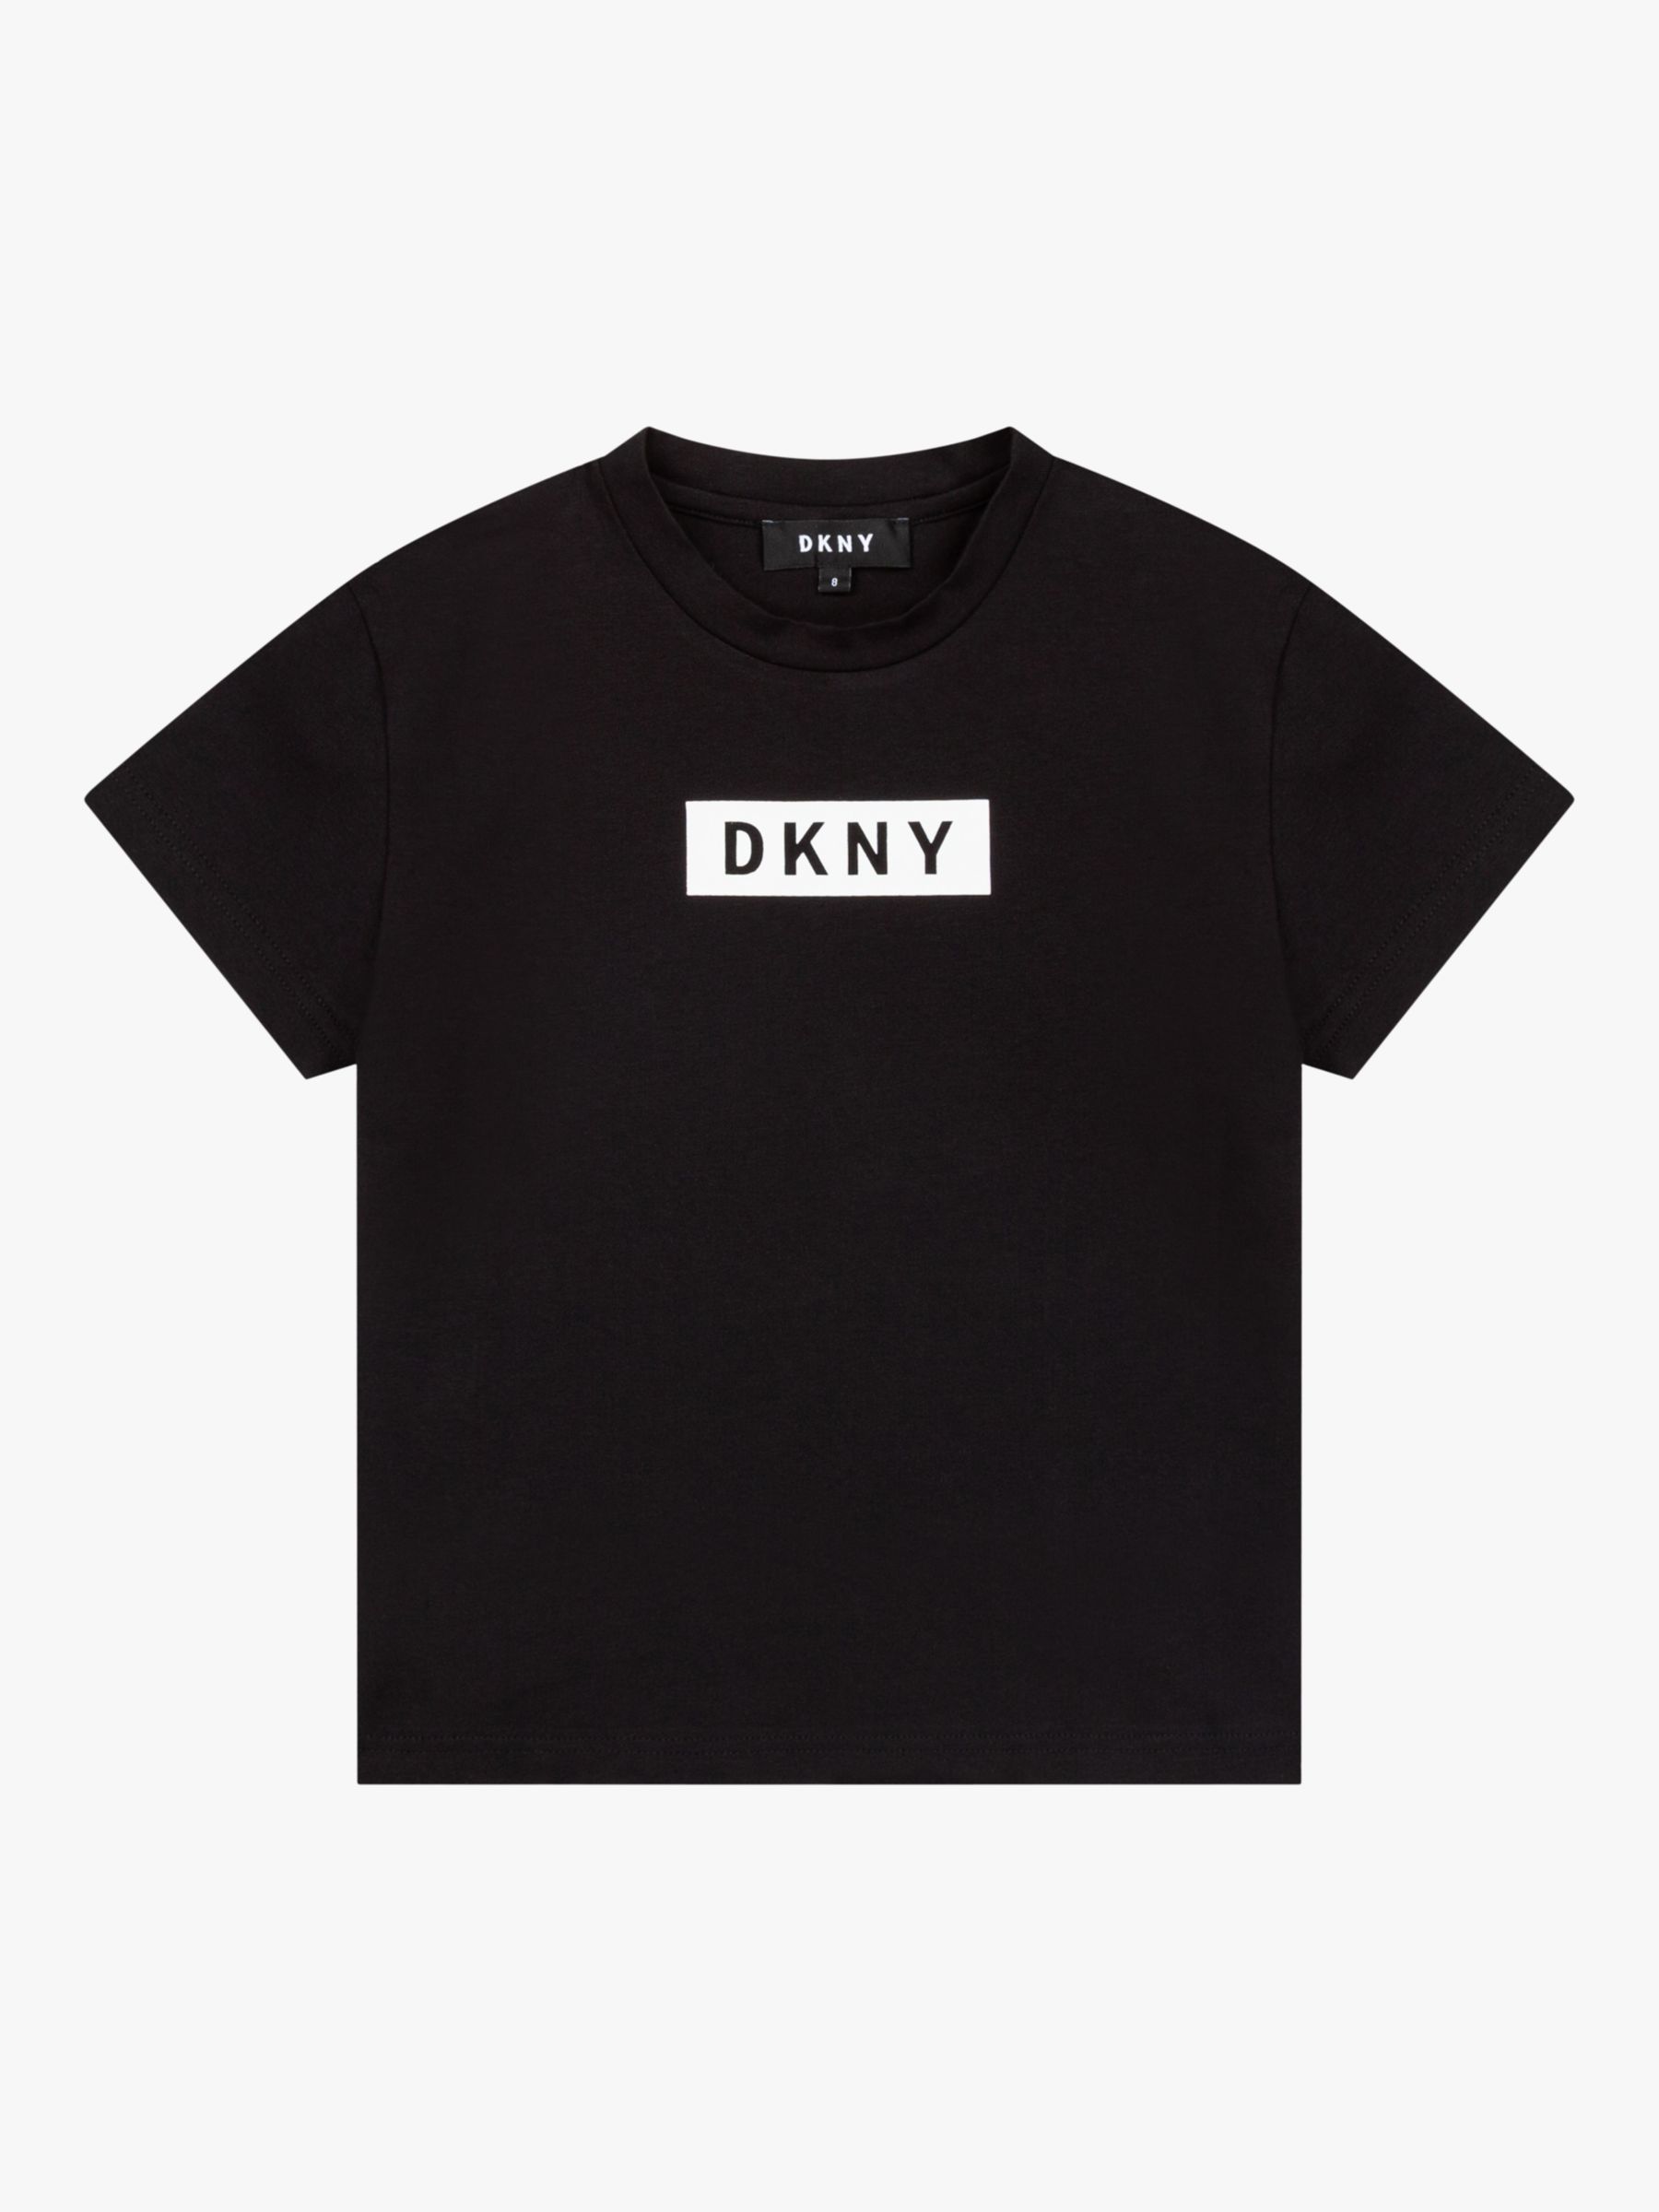 DKNY Kids' Logo T-Shirt, Black at John Lewis & Partners